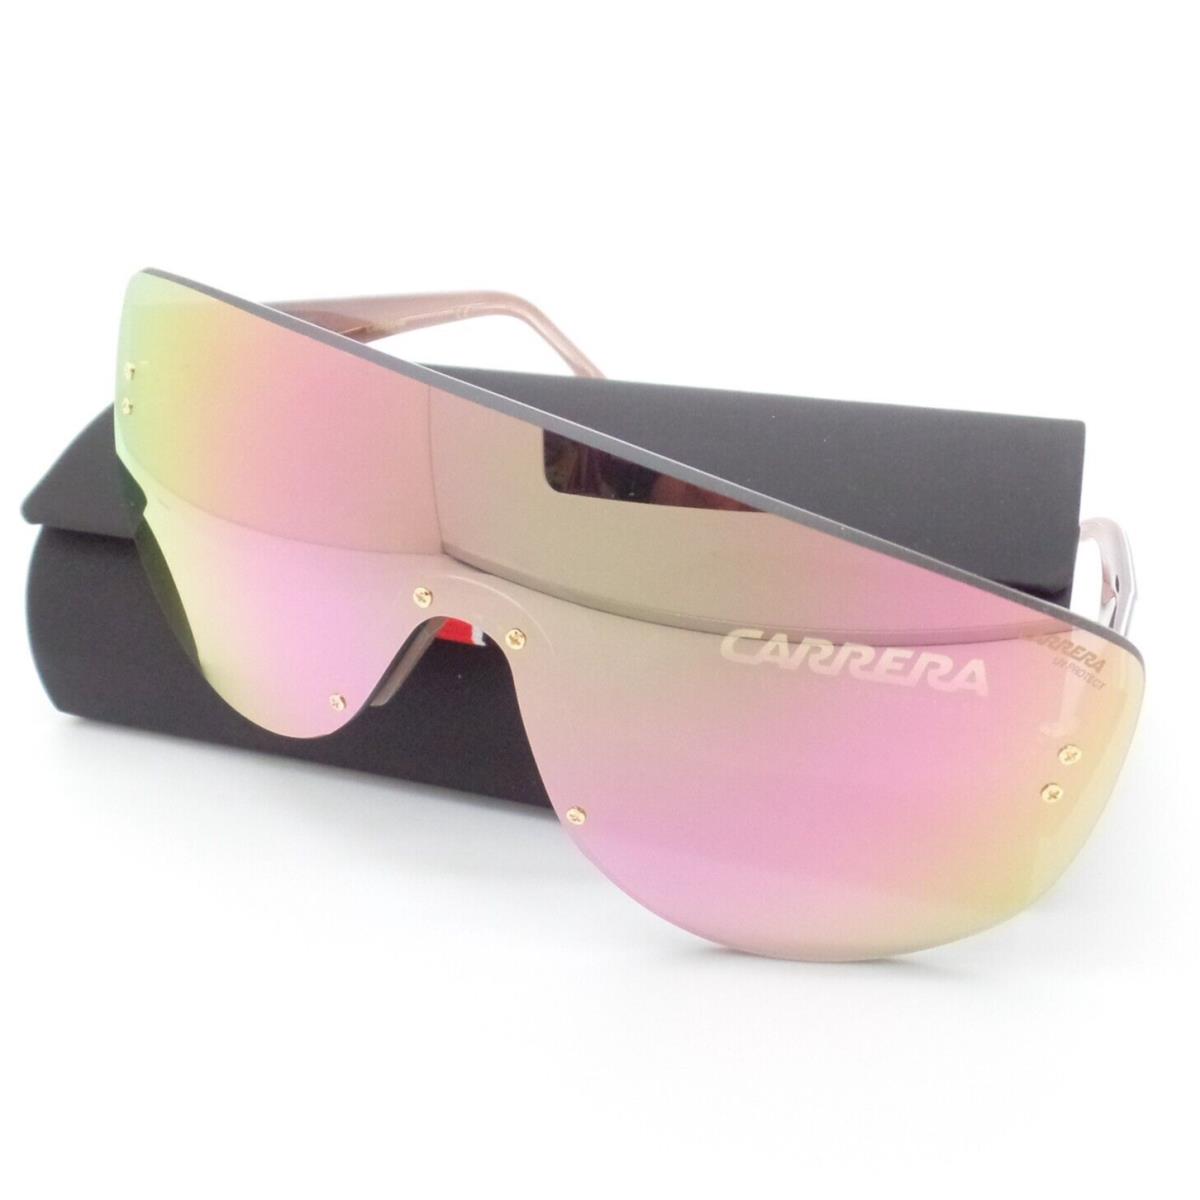 Carrera Flaglab 12 0000J Rose Gold Mirror Black Sunglasses